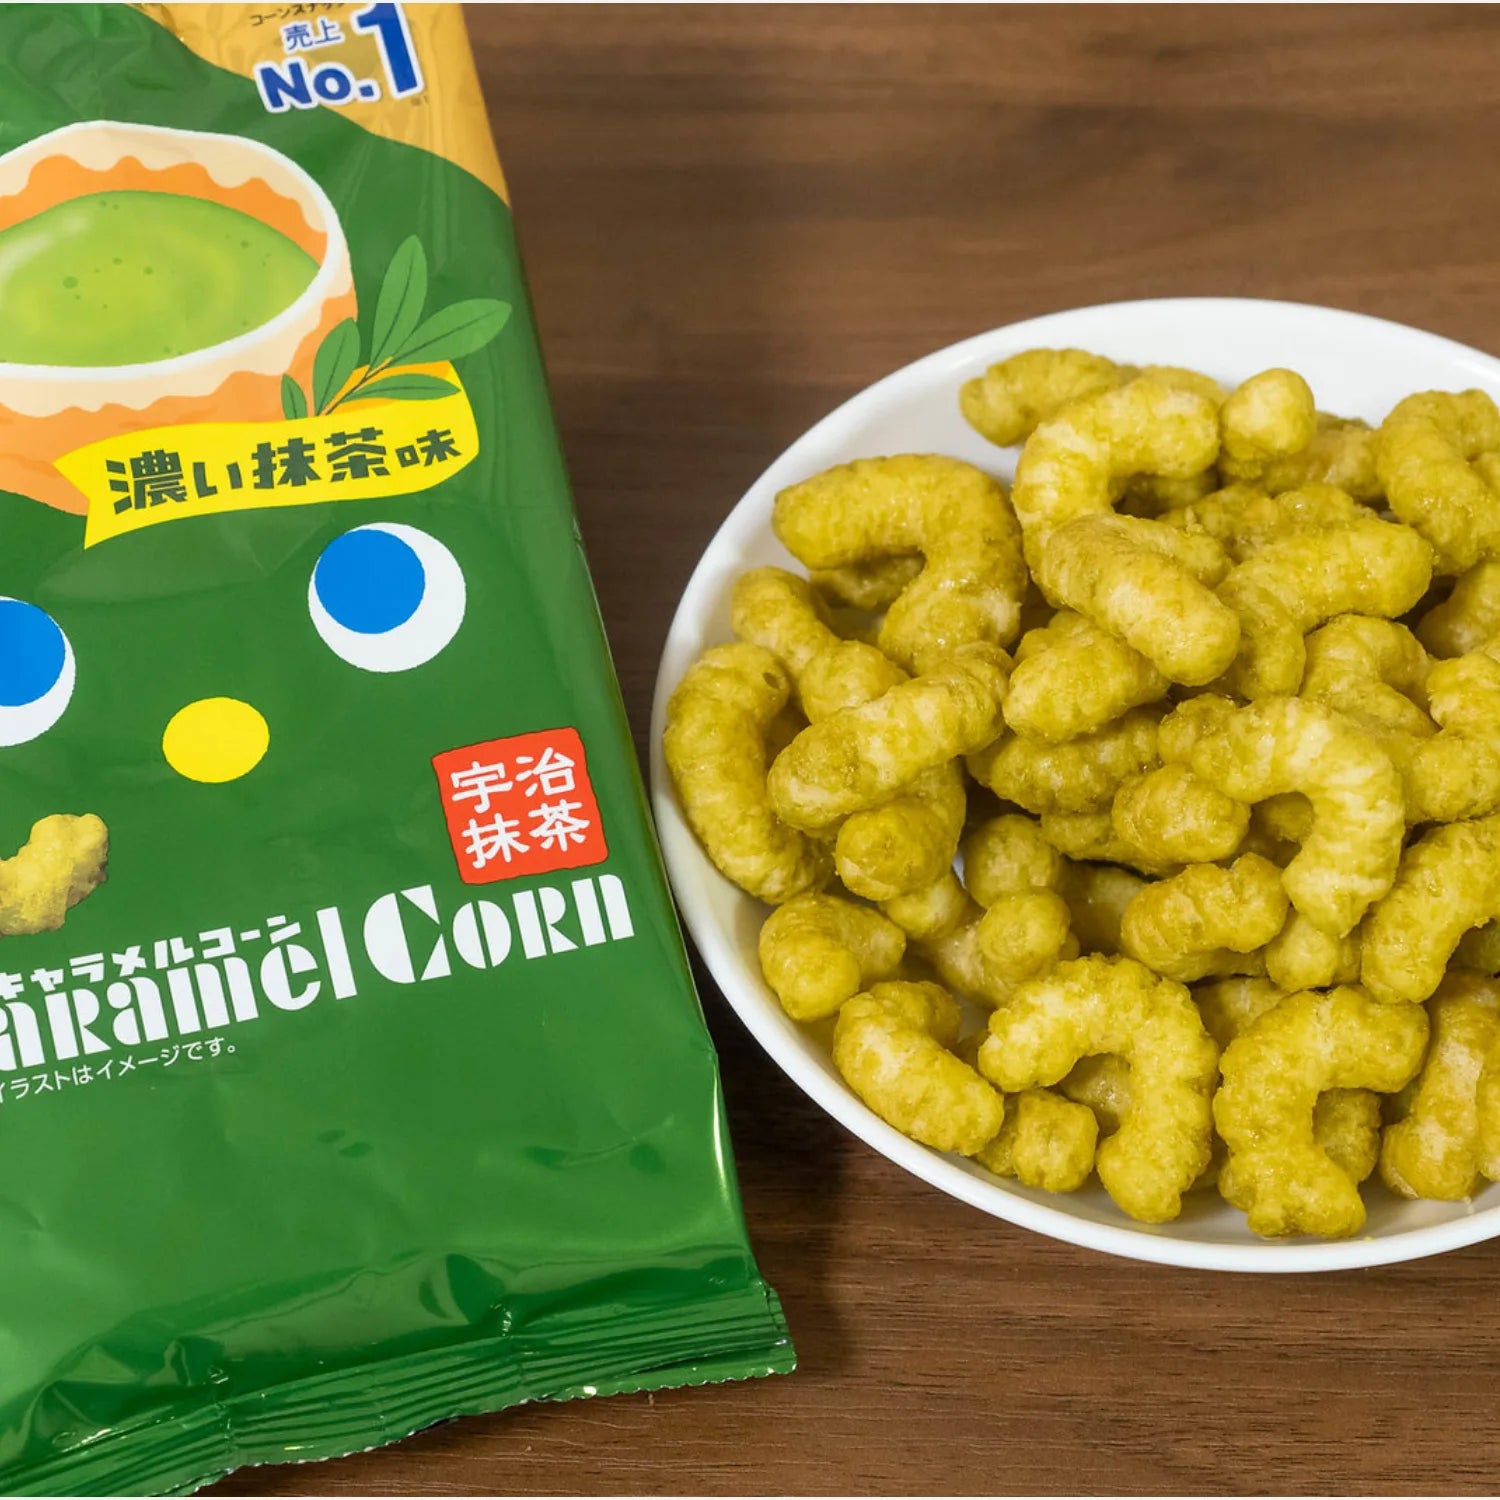 Tohato Caramel Corn Uji Matcha 65g - Buy Me Japan